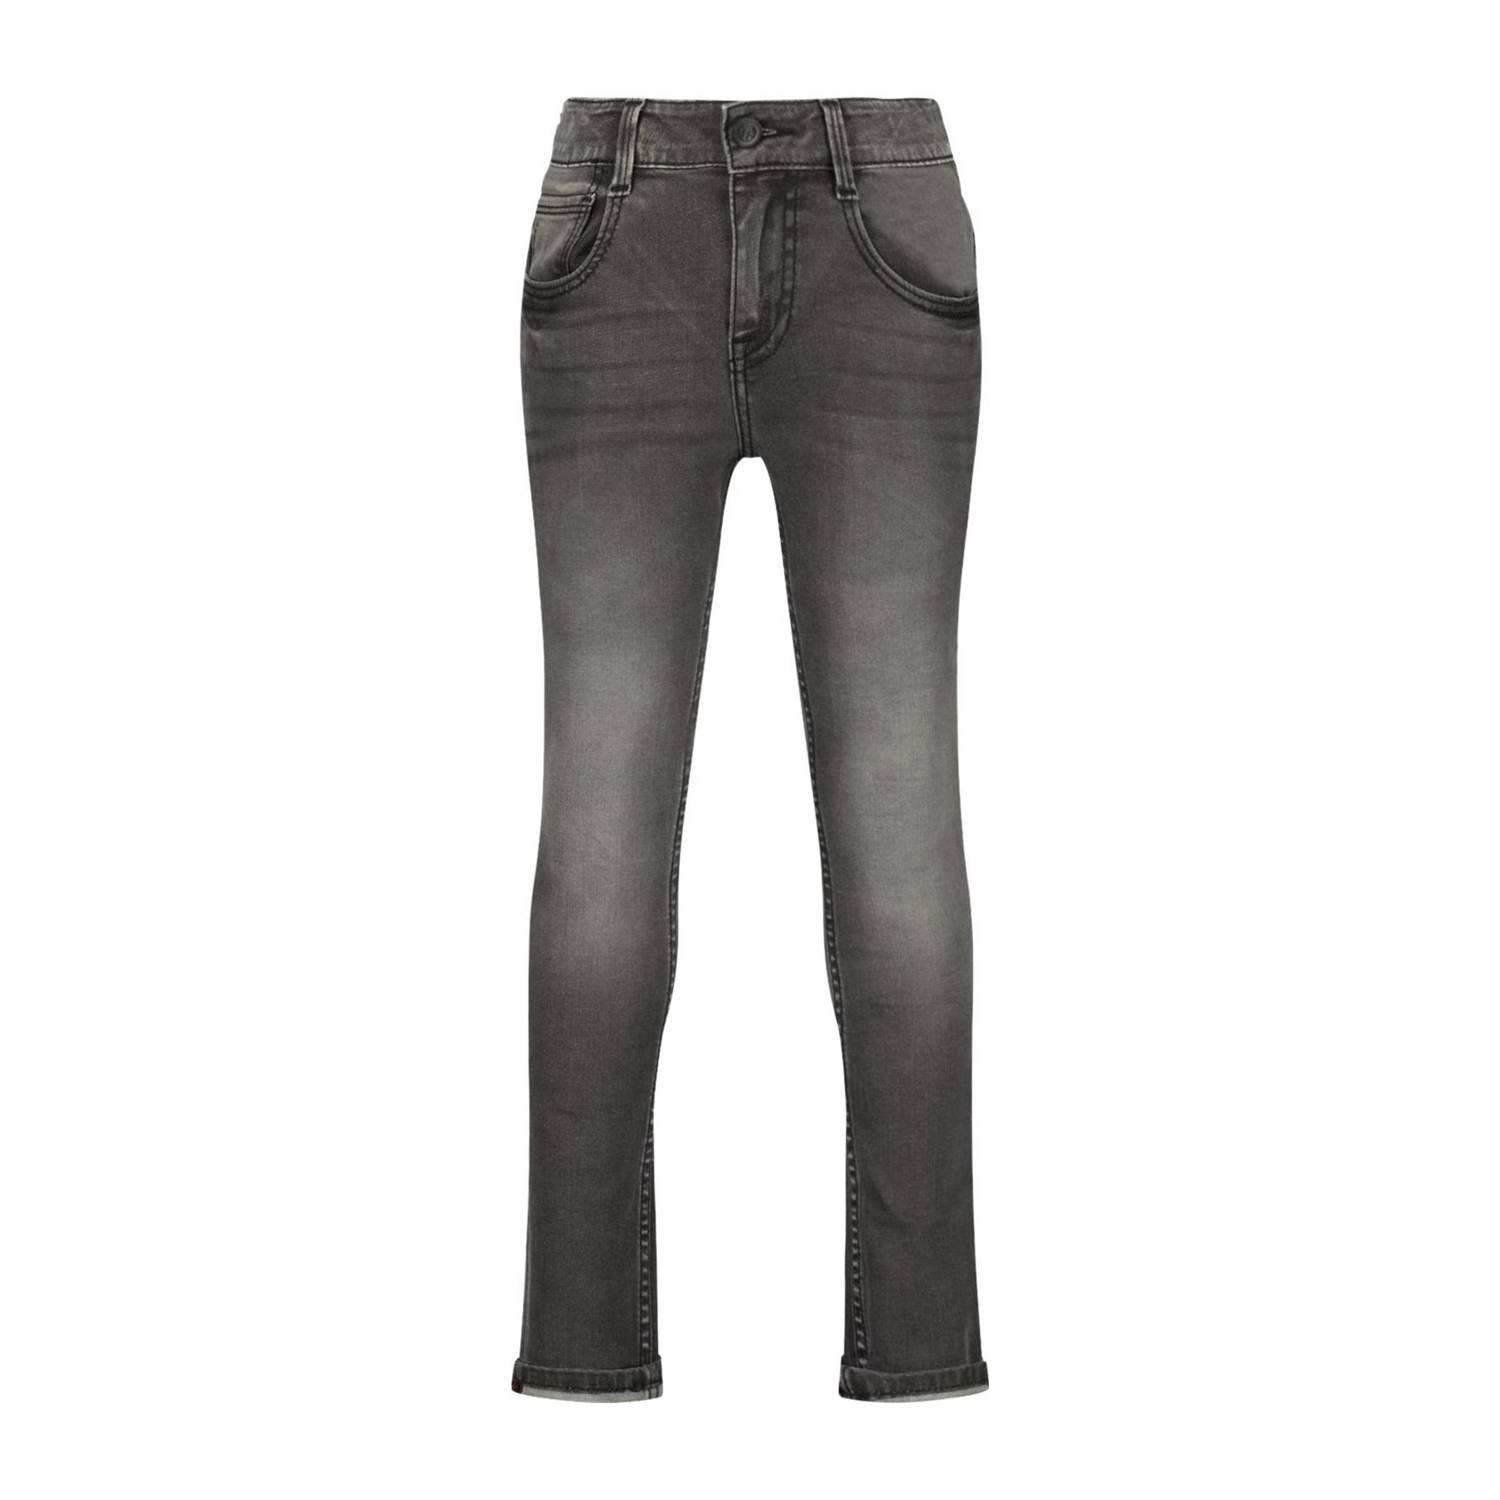 Raizzed skinny jeans Tokyo vintage grey Grijs Jongens Stretchdenim Effen 134